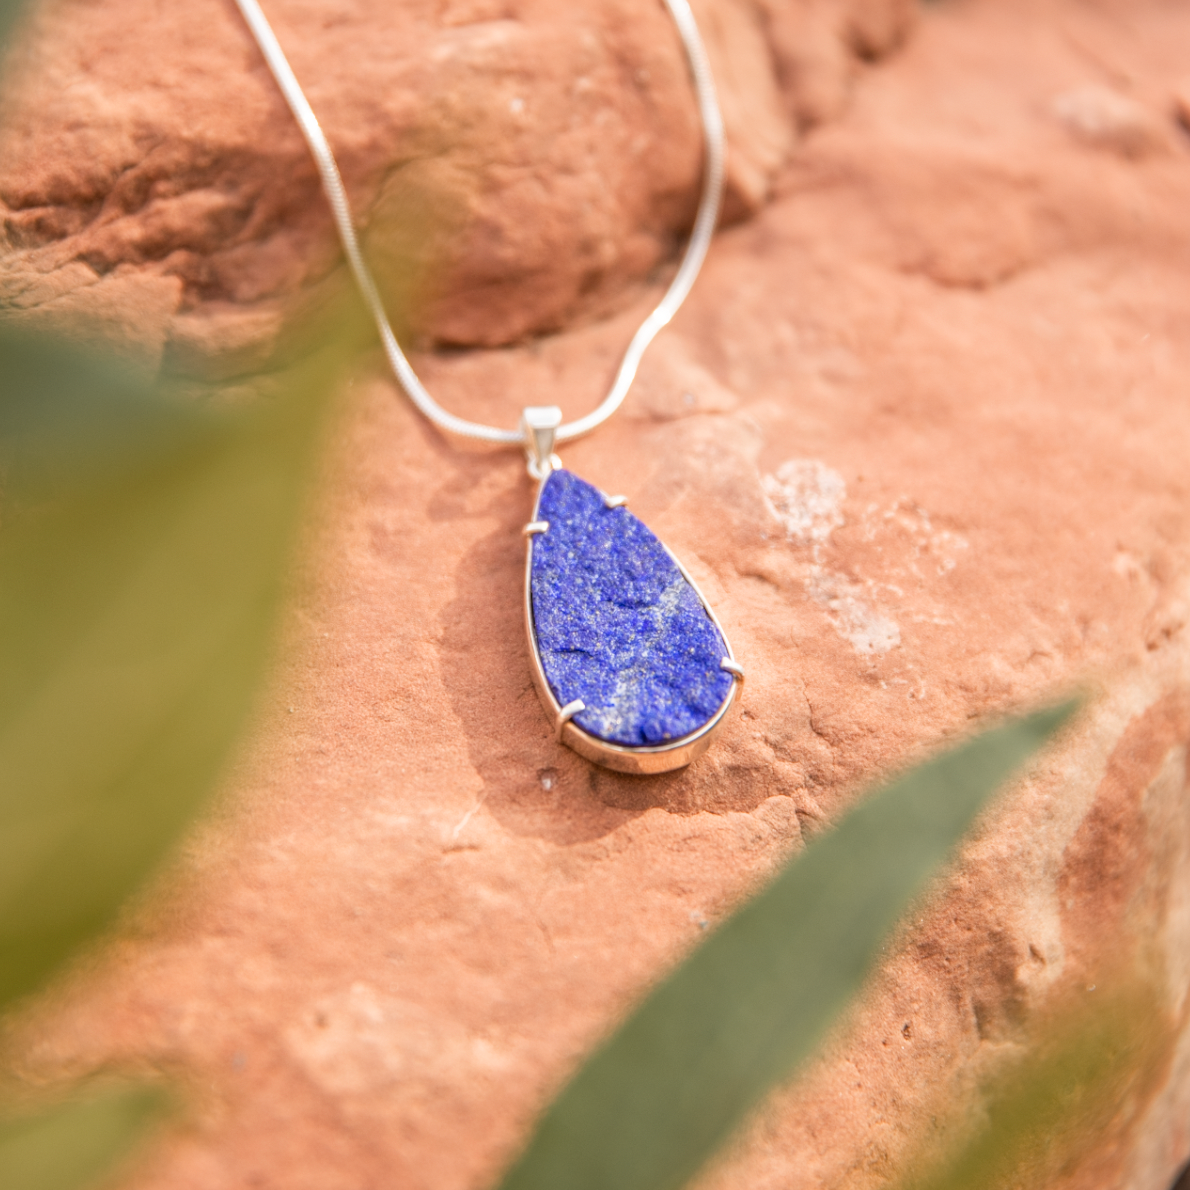 crystal jewelry: labradorite pendant in sedona, arizona used for crystal healing